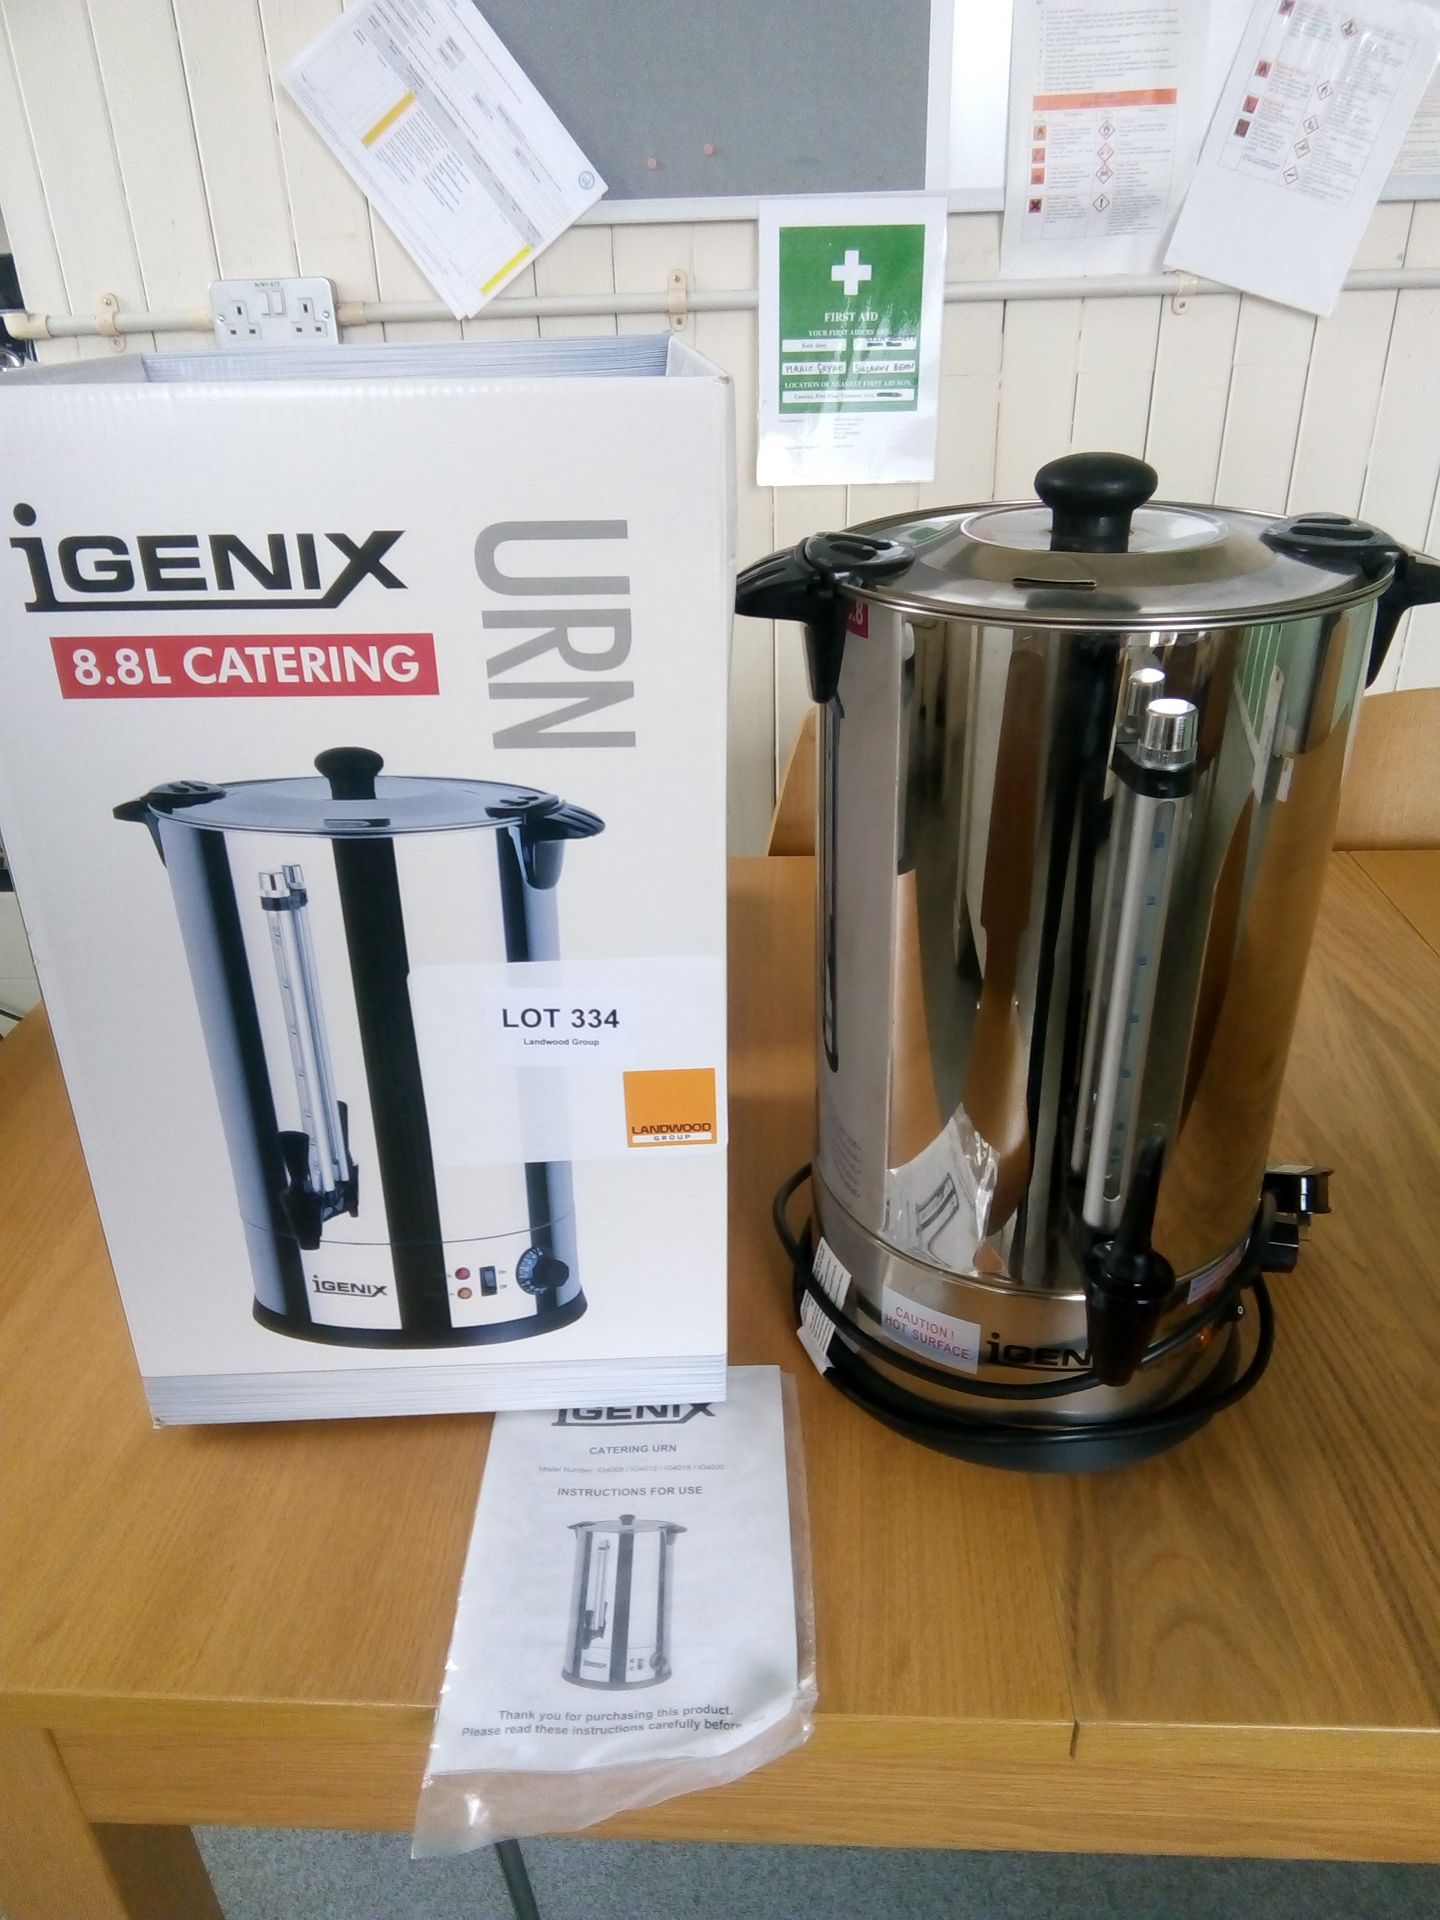 IGENIX 8.8 litre Hot Water boiler in box